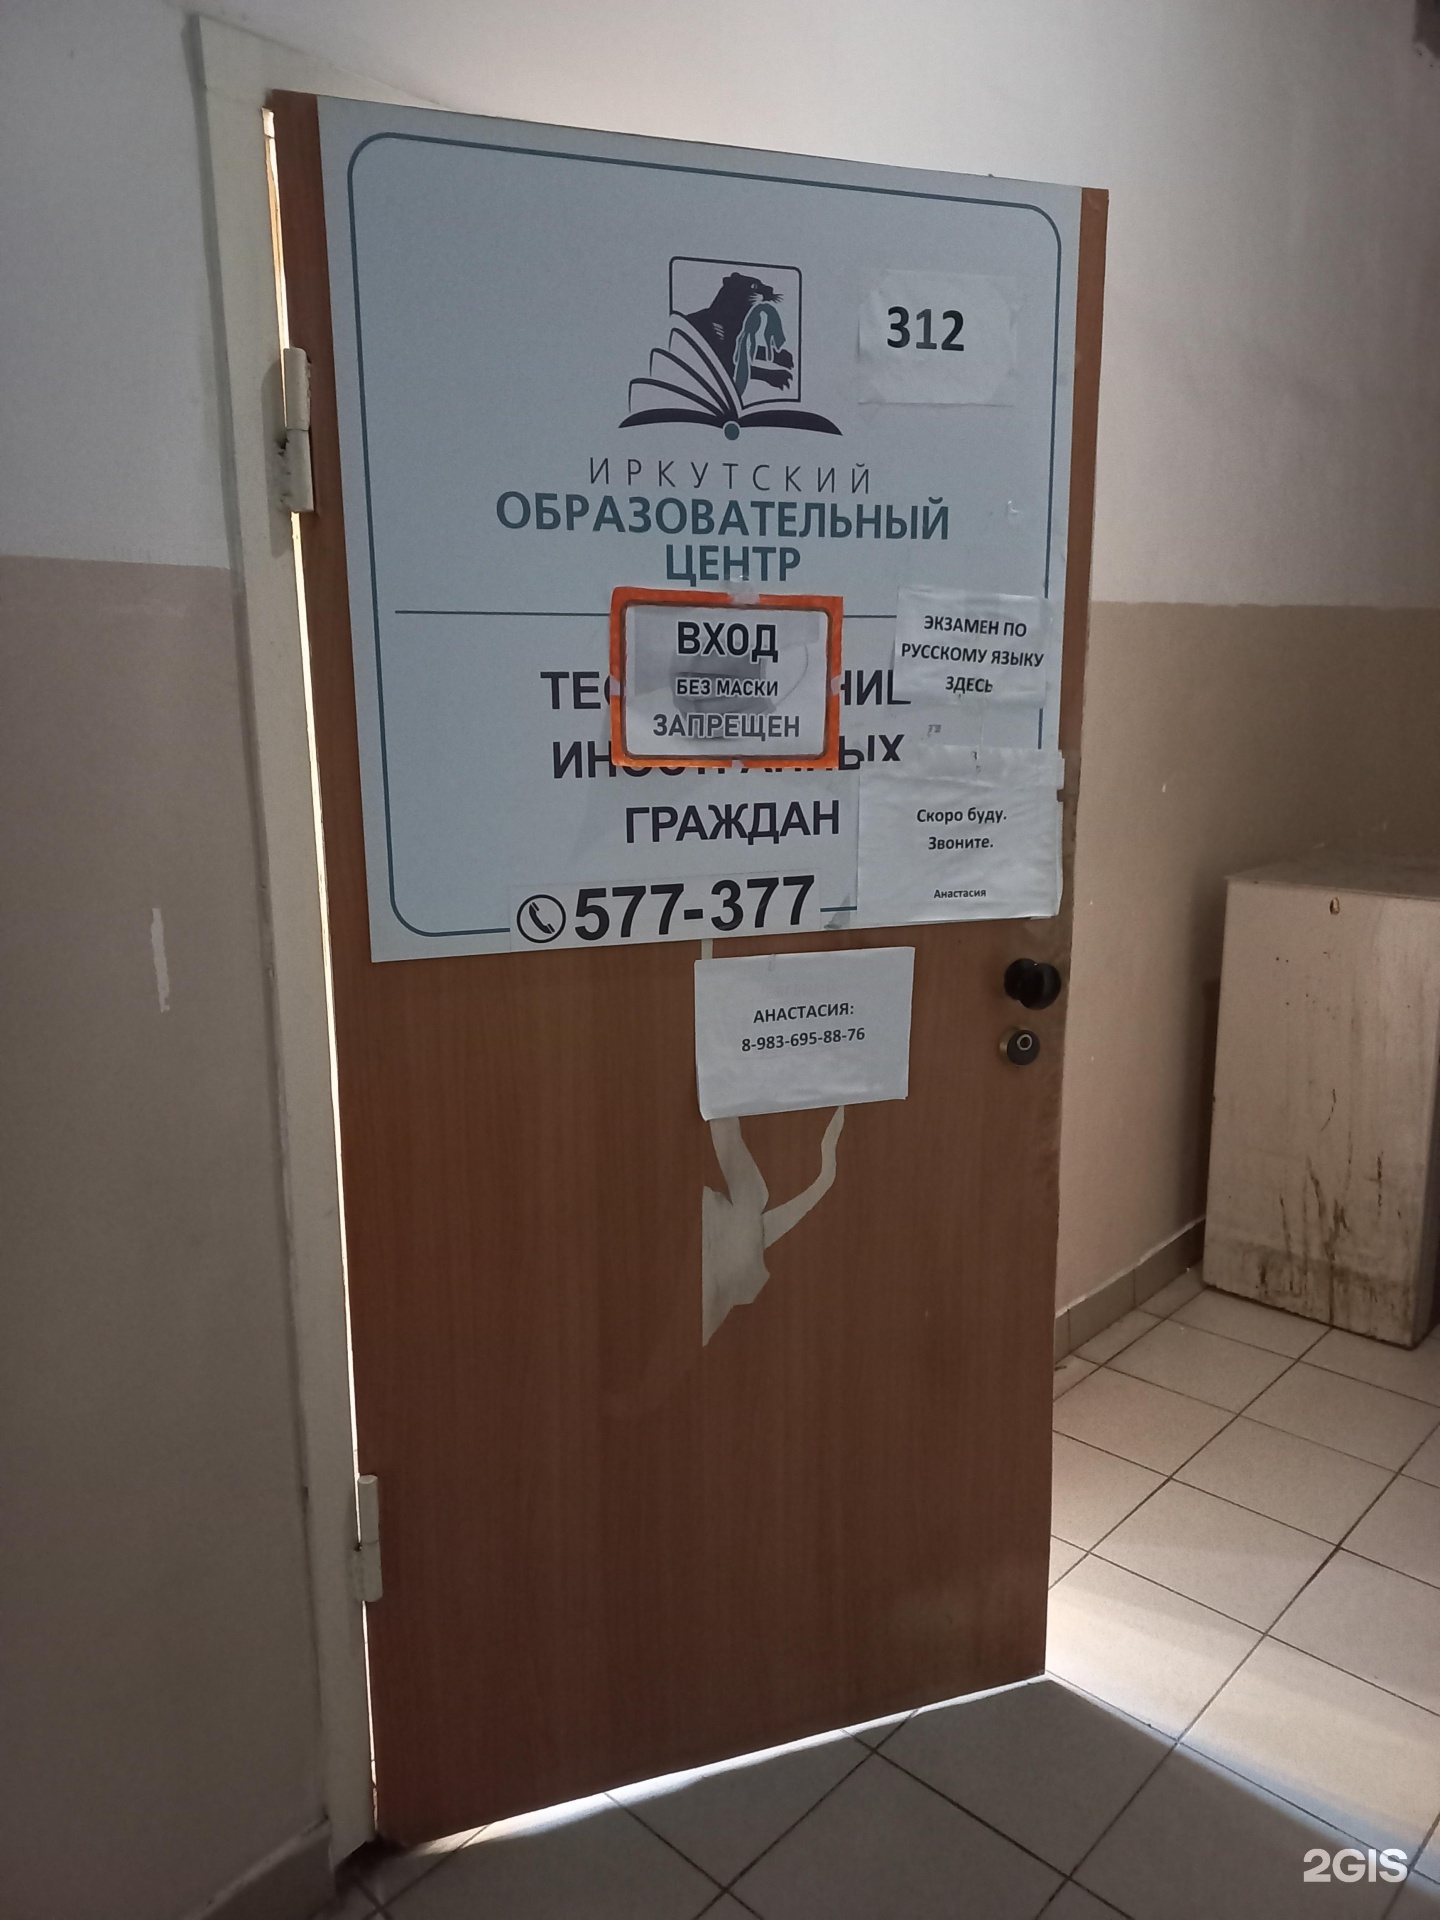 Учебный центр охрана Иркутск. Иркутской учебный центр